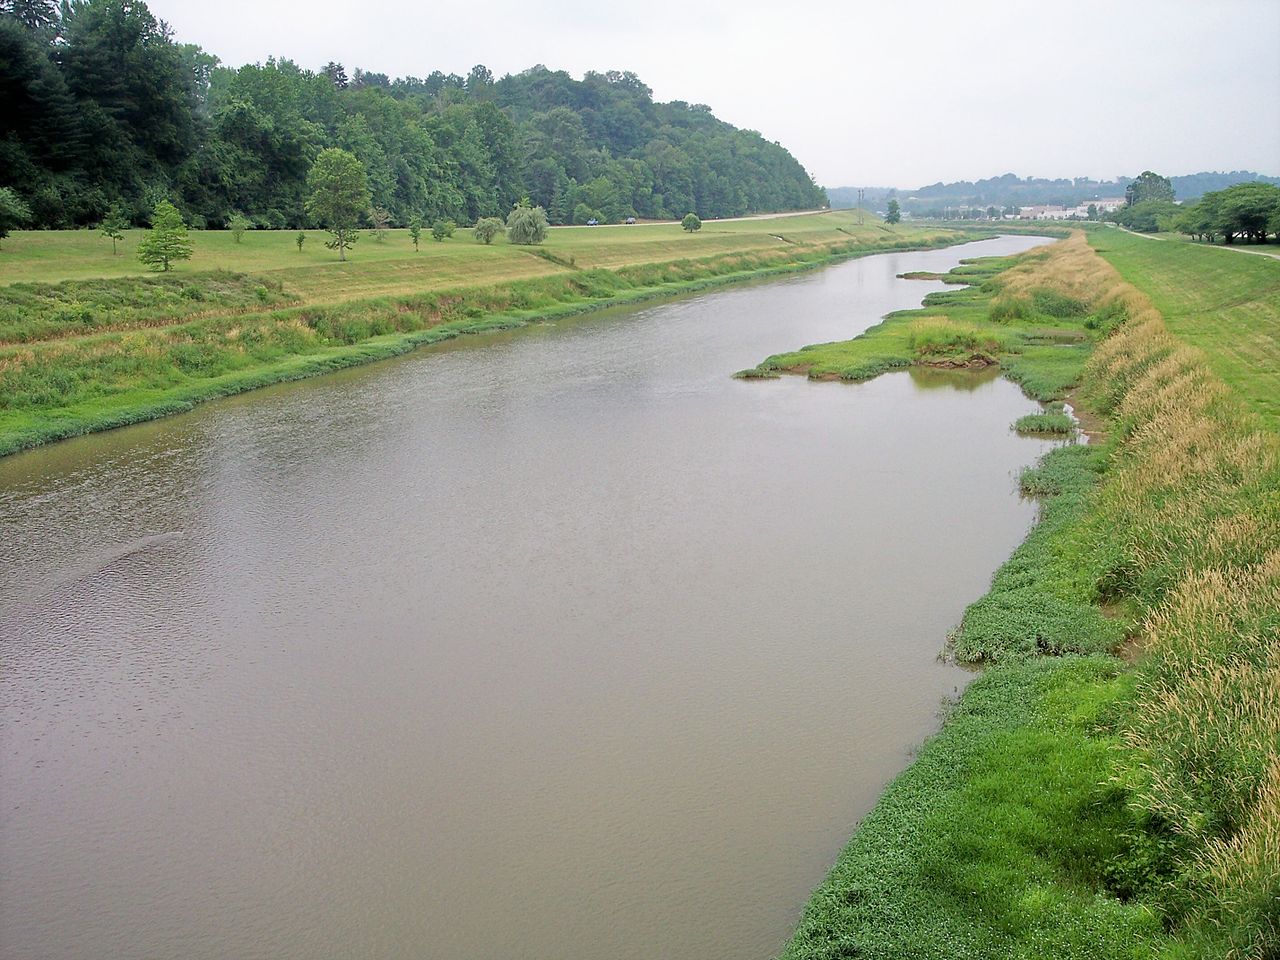 Image of channelized Hocking River by Tim Kiser.